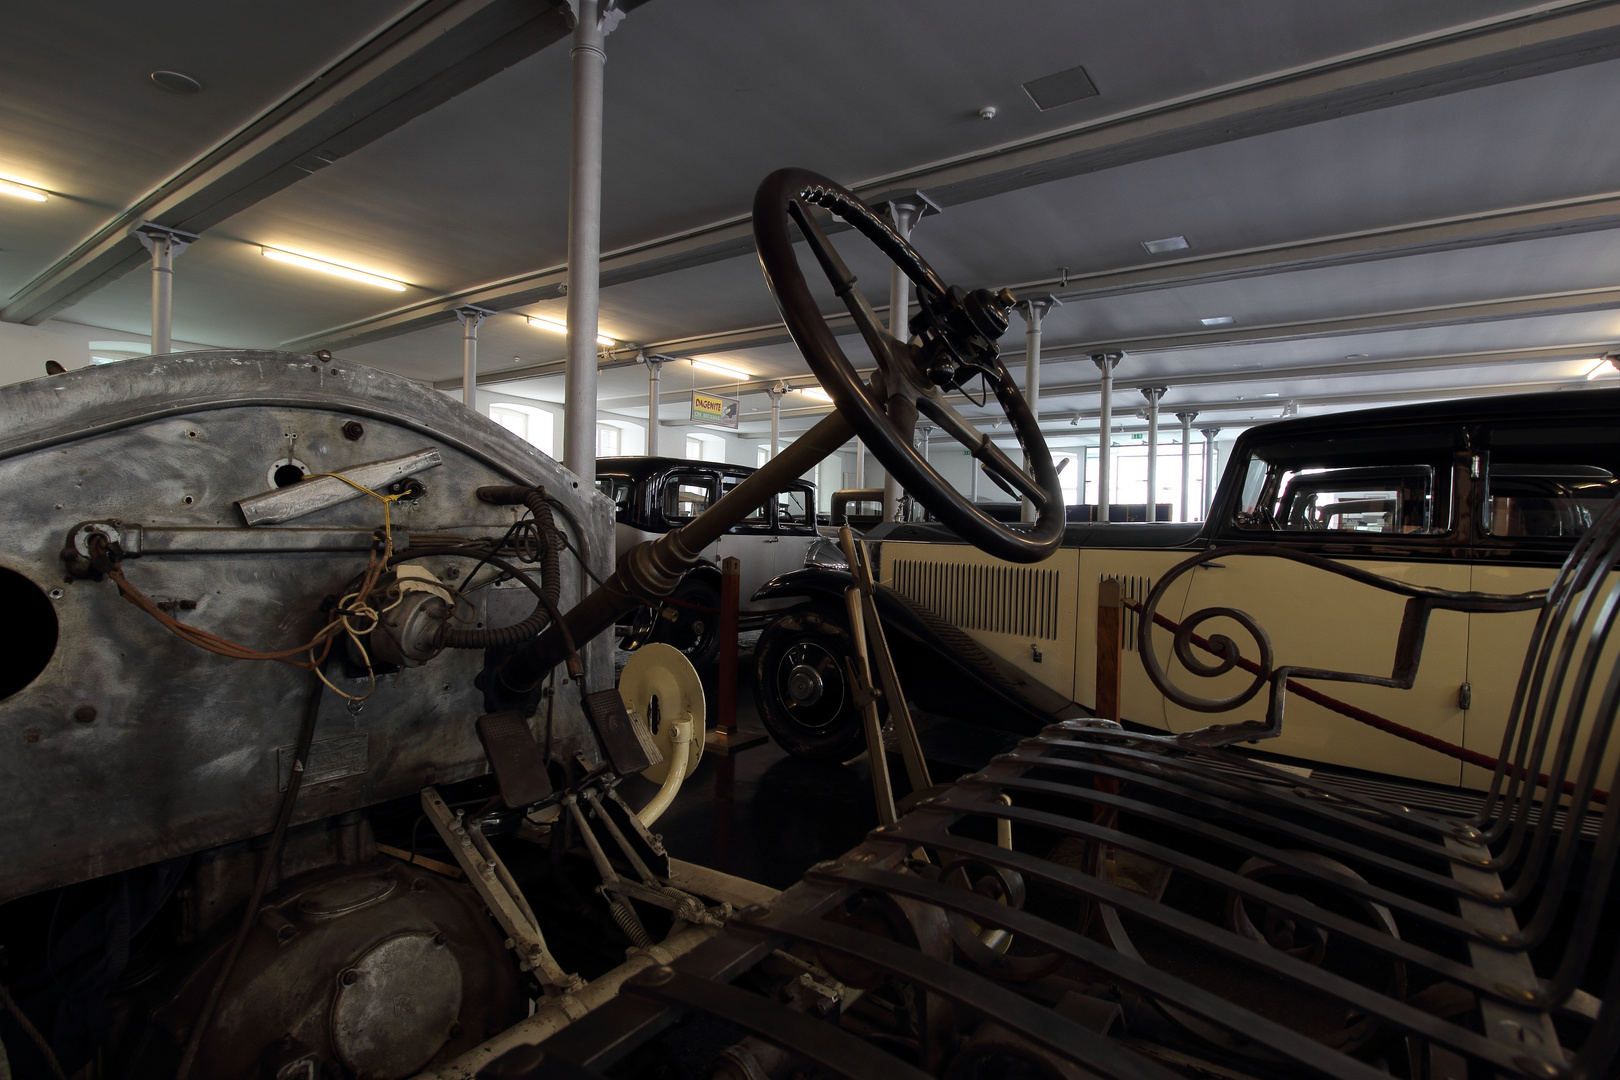  das rolls-royce- Automobil museum - in Dornbirn 